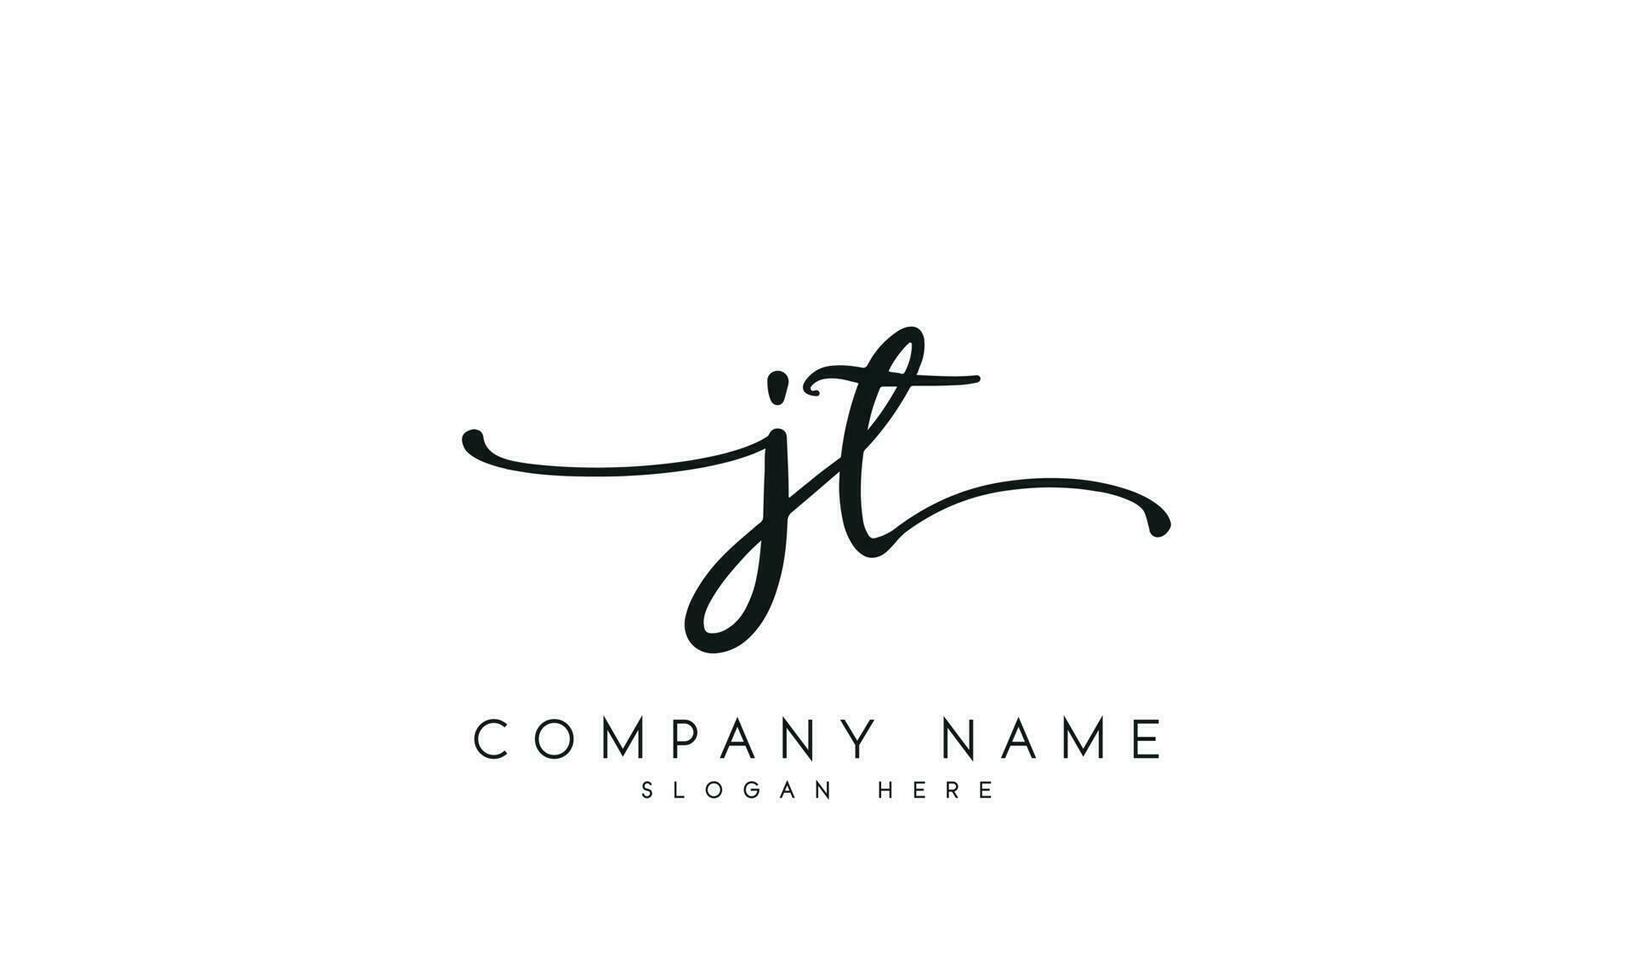 Handwriting JT logo design. JT logo design vector illustration on white background. free vector